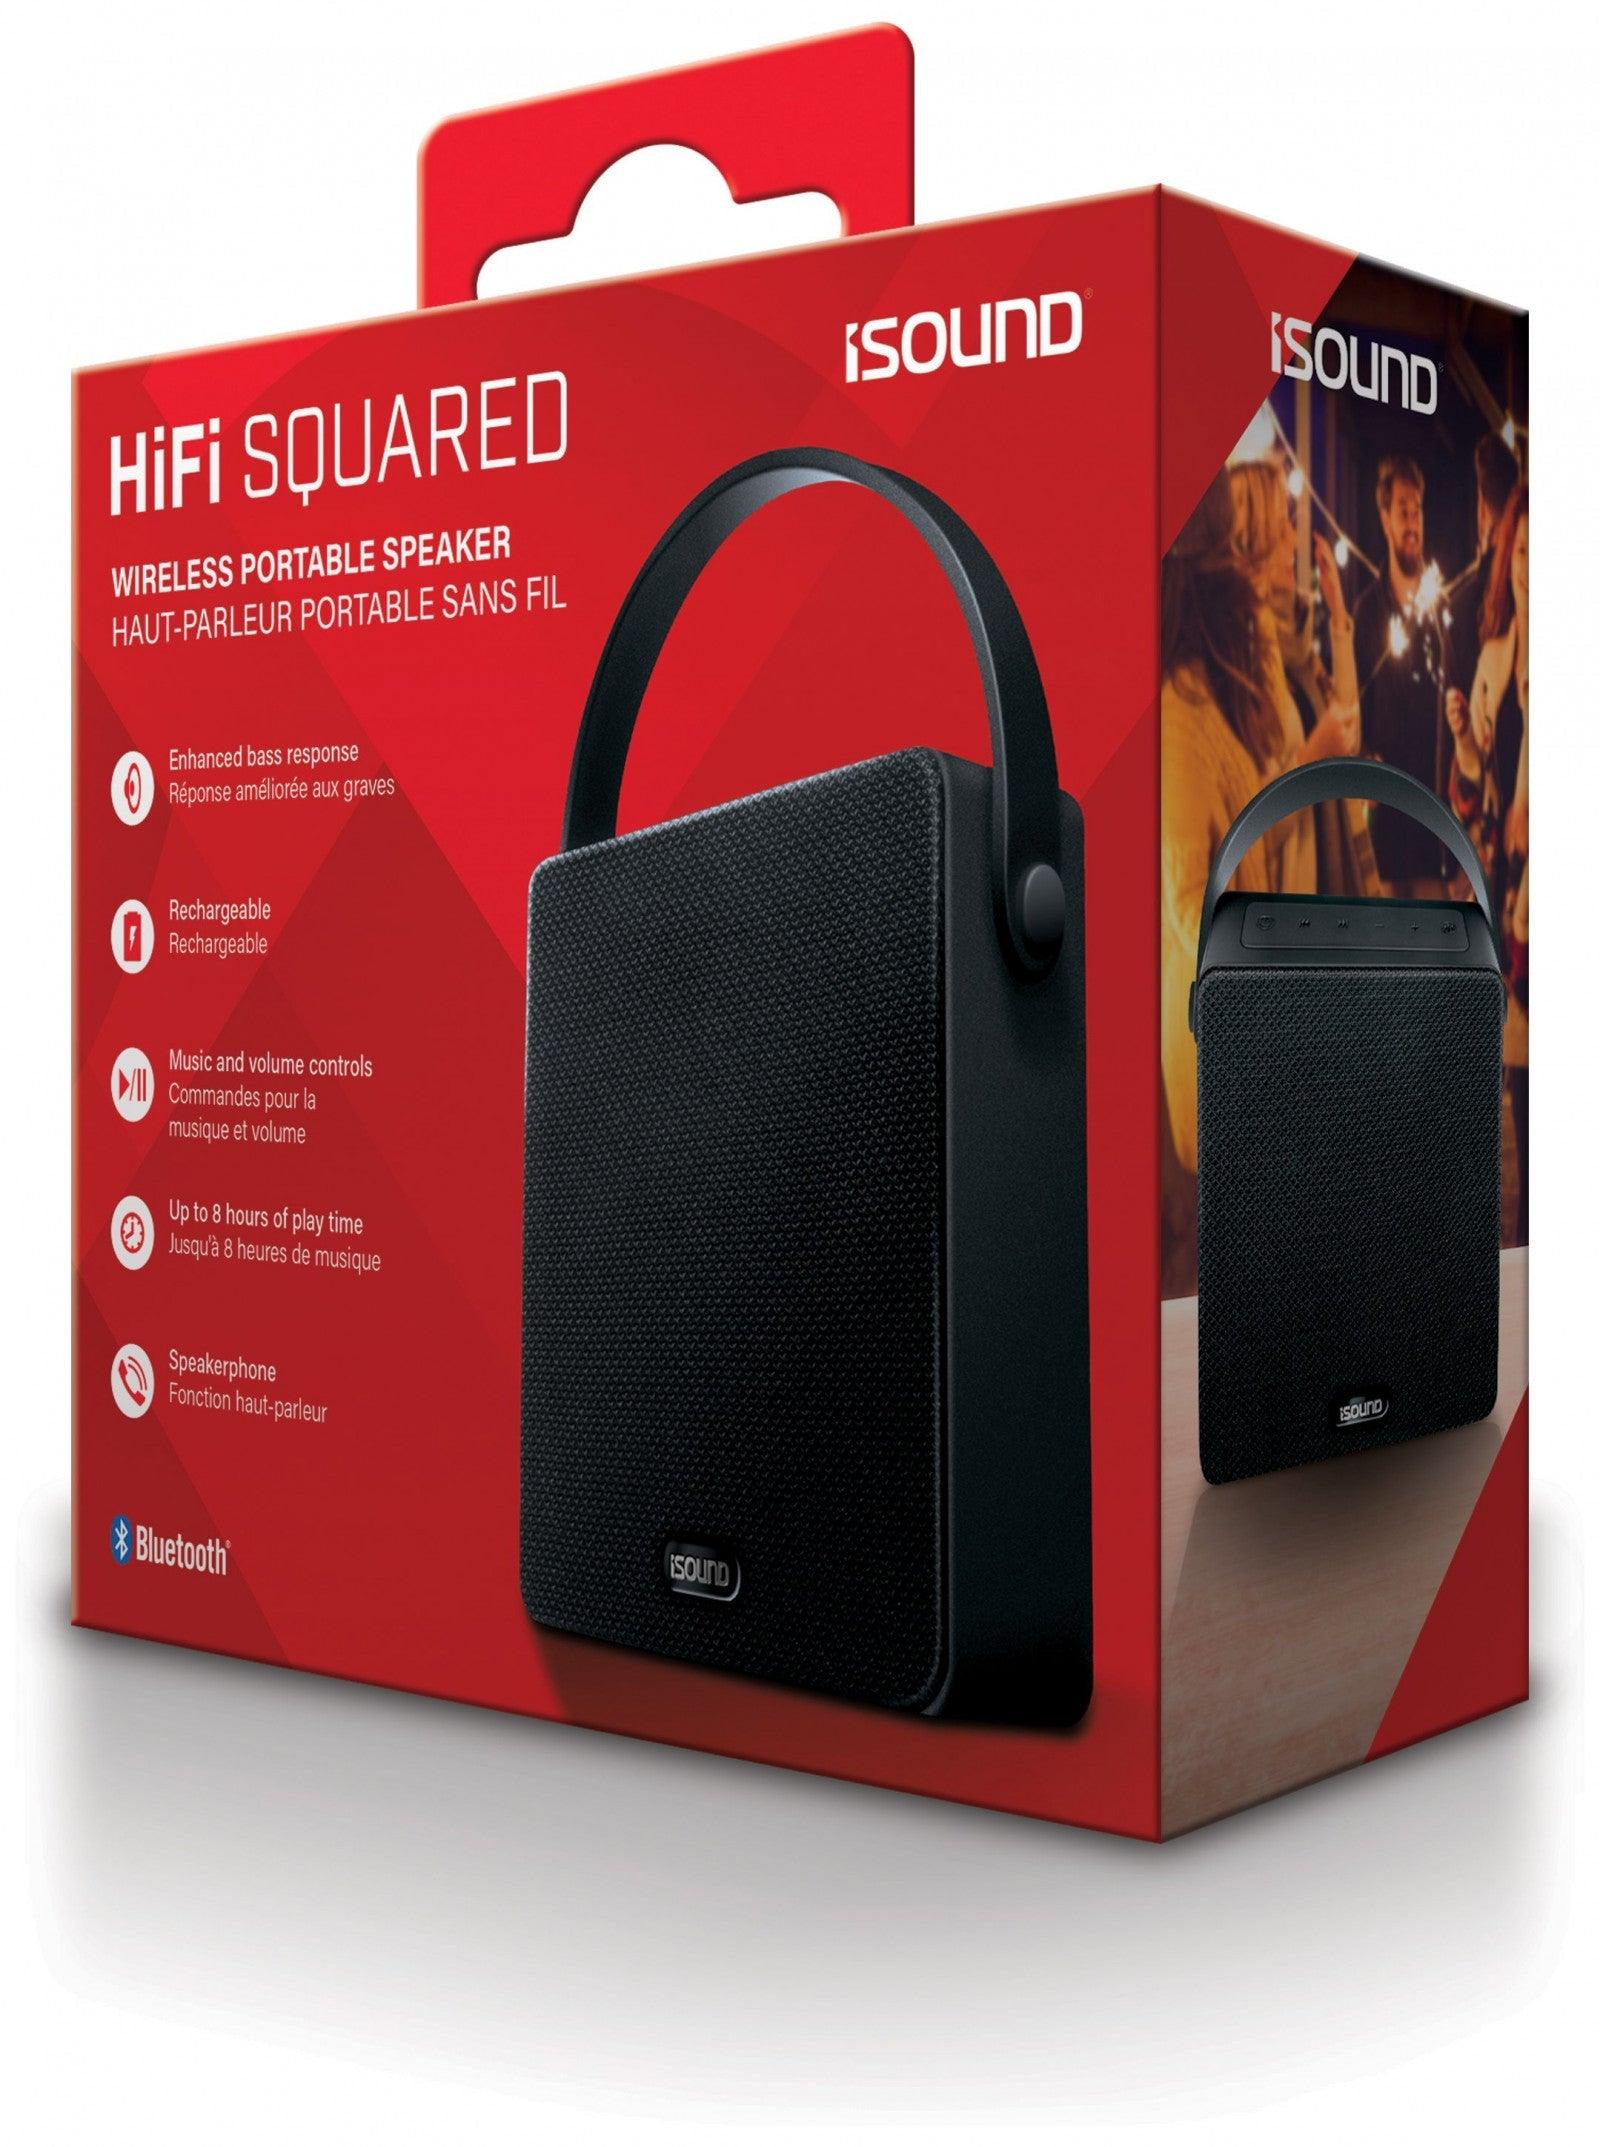 VR-83767 iSound Bluetooth HIFI Squared Speaker - Black - iSOUND - Titan Pop Culture